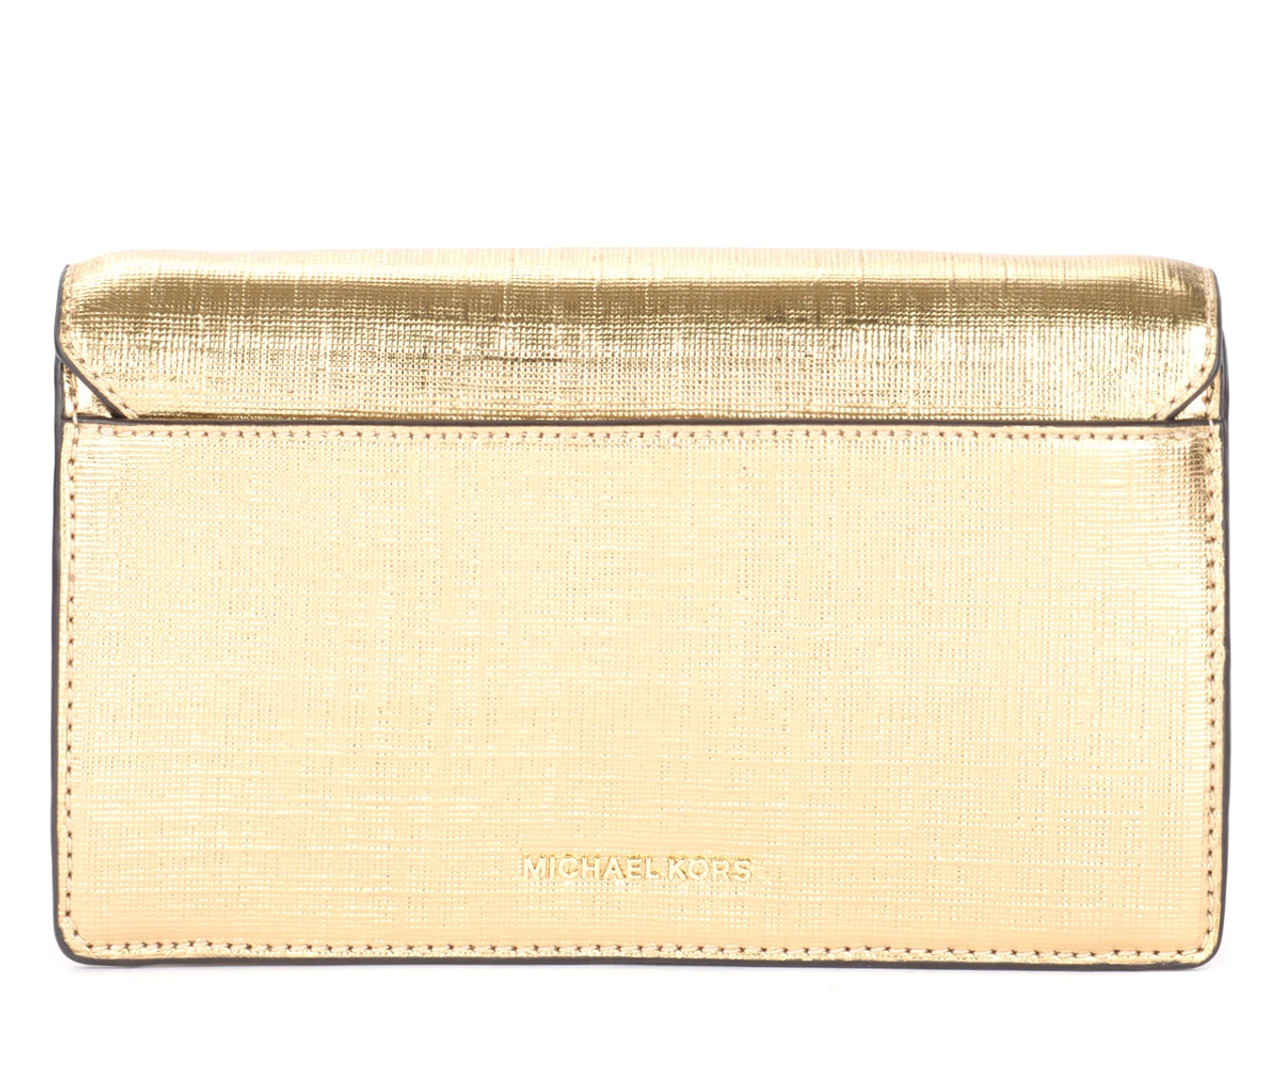 Bag Michael Kors Grace M in gold metallic leather with shoulder strap |  H-Brands